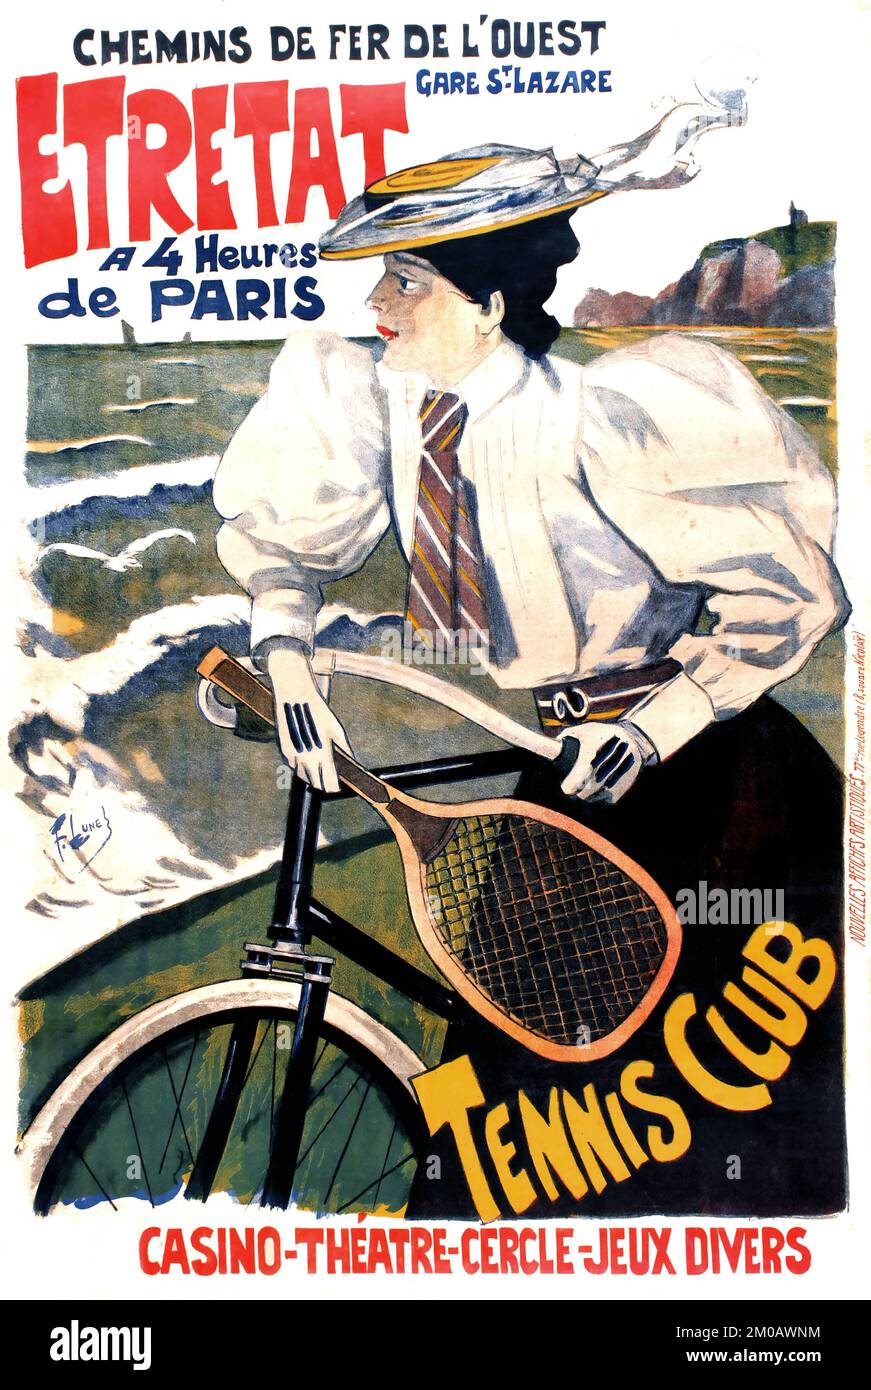 Chemins De Fer De L'Ouest Cartel del ferrocarril de Etretat París - Club de tenis, teatro, casino - 1900s Foto de stock